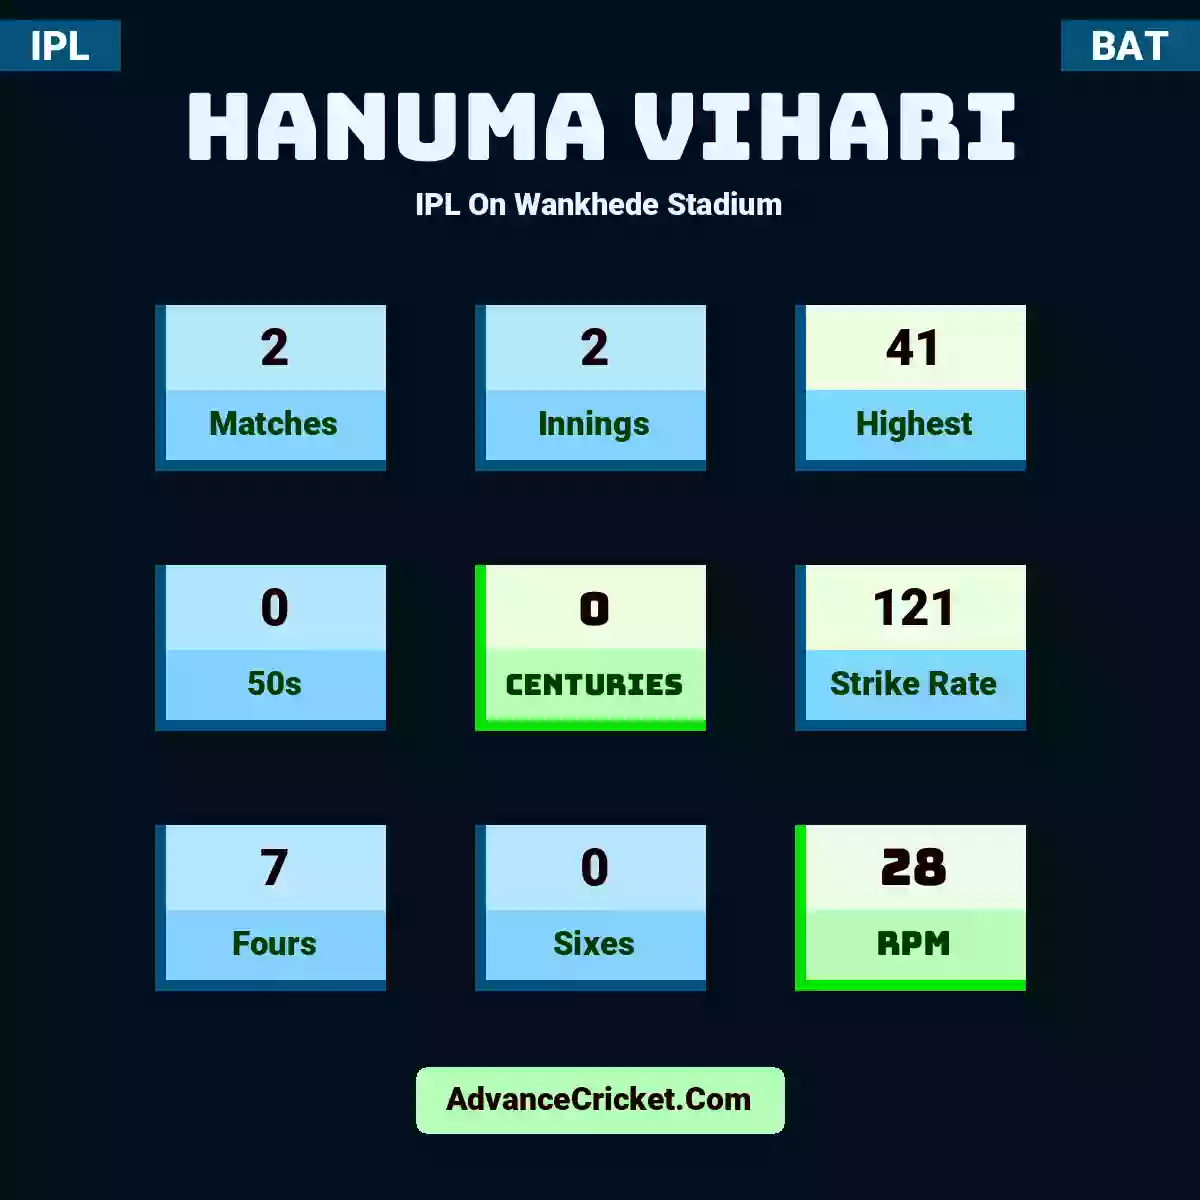 Hanuma Vihari IPL  On Wankhede Stadium, Hanuma Vihari played 2 matches, scored 41 runs as highest, 0 half-centuries, and 0 centuries, with a strike rate of 121. H.Vihari hit 7 fours and 0 sixes, with an RPM of 28.